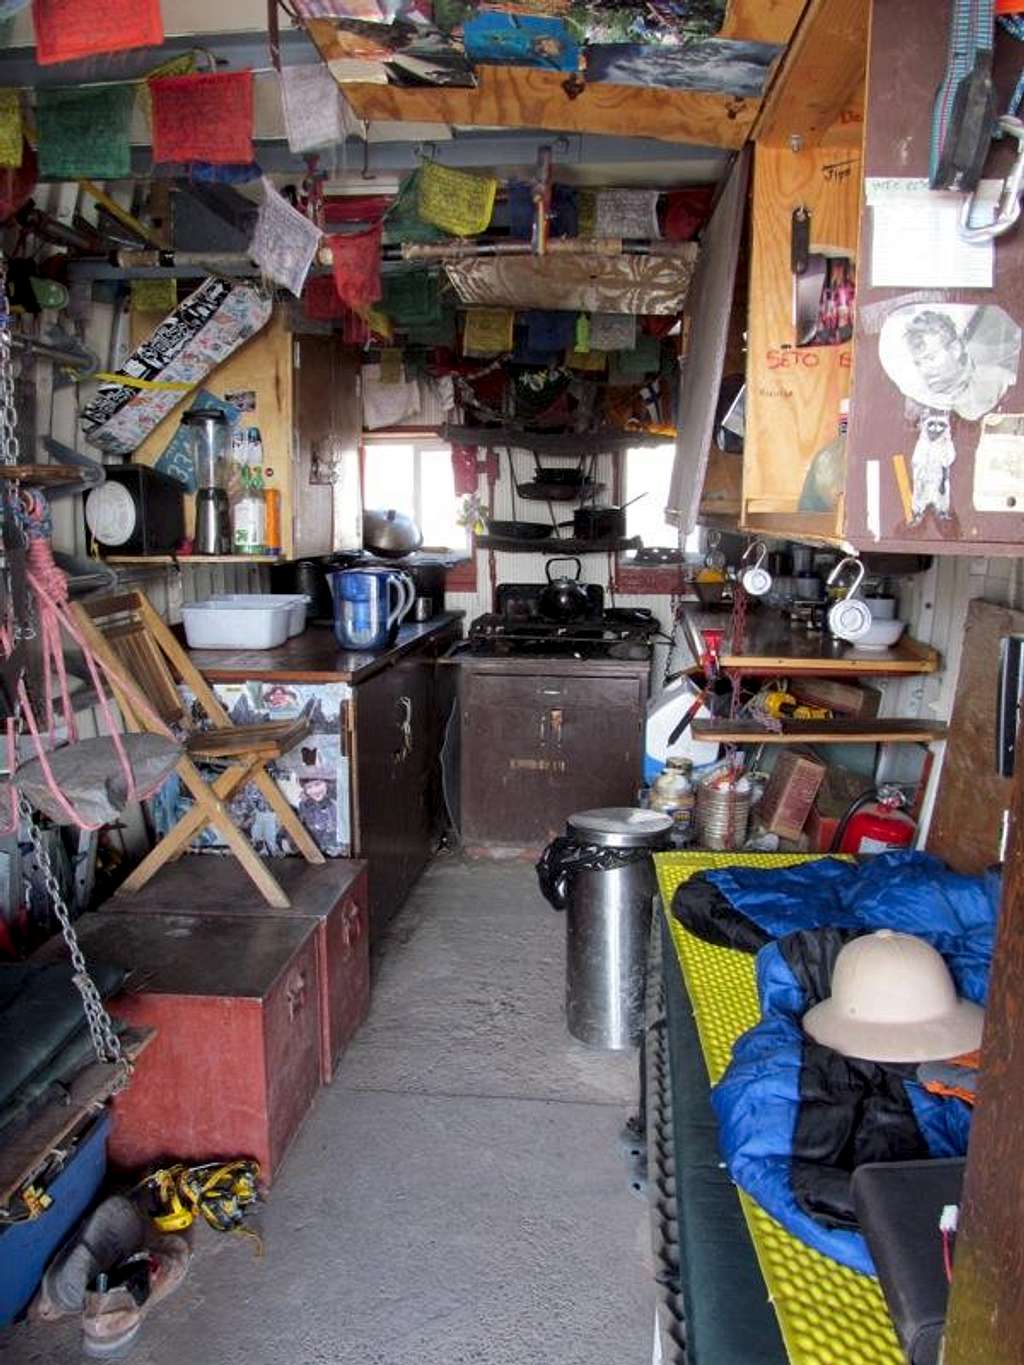 Schurman Rangers' Cabin Interior